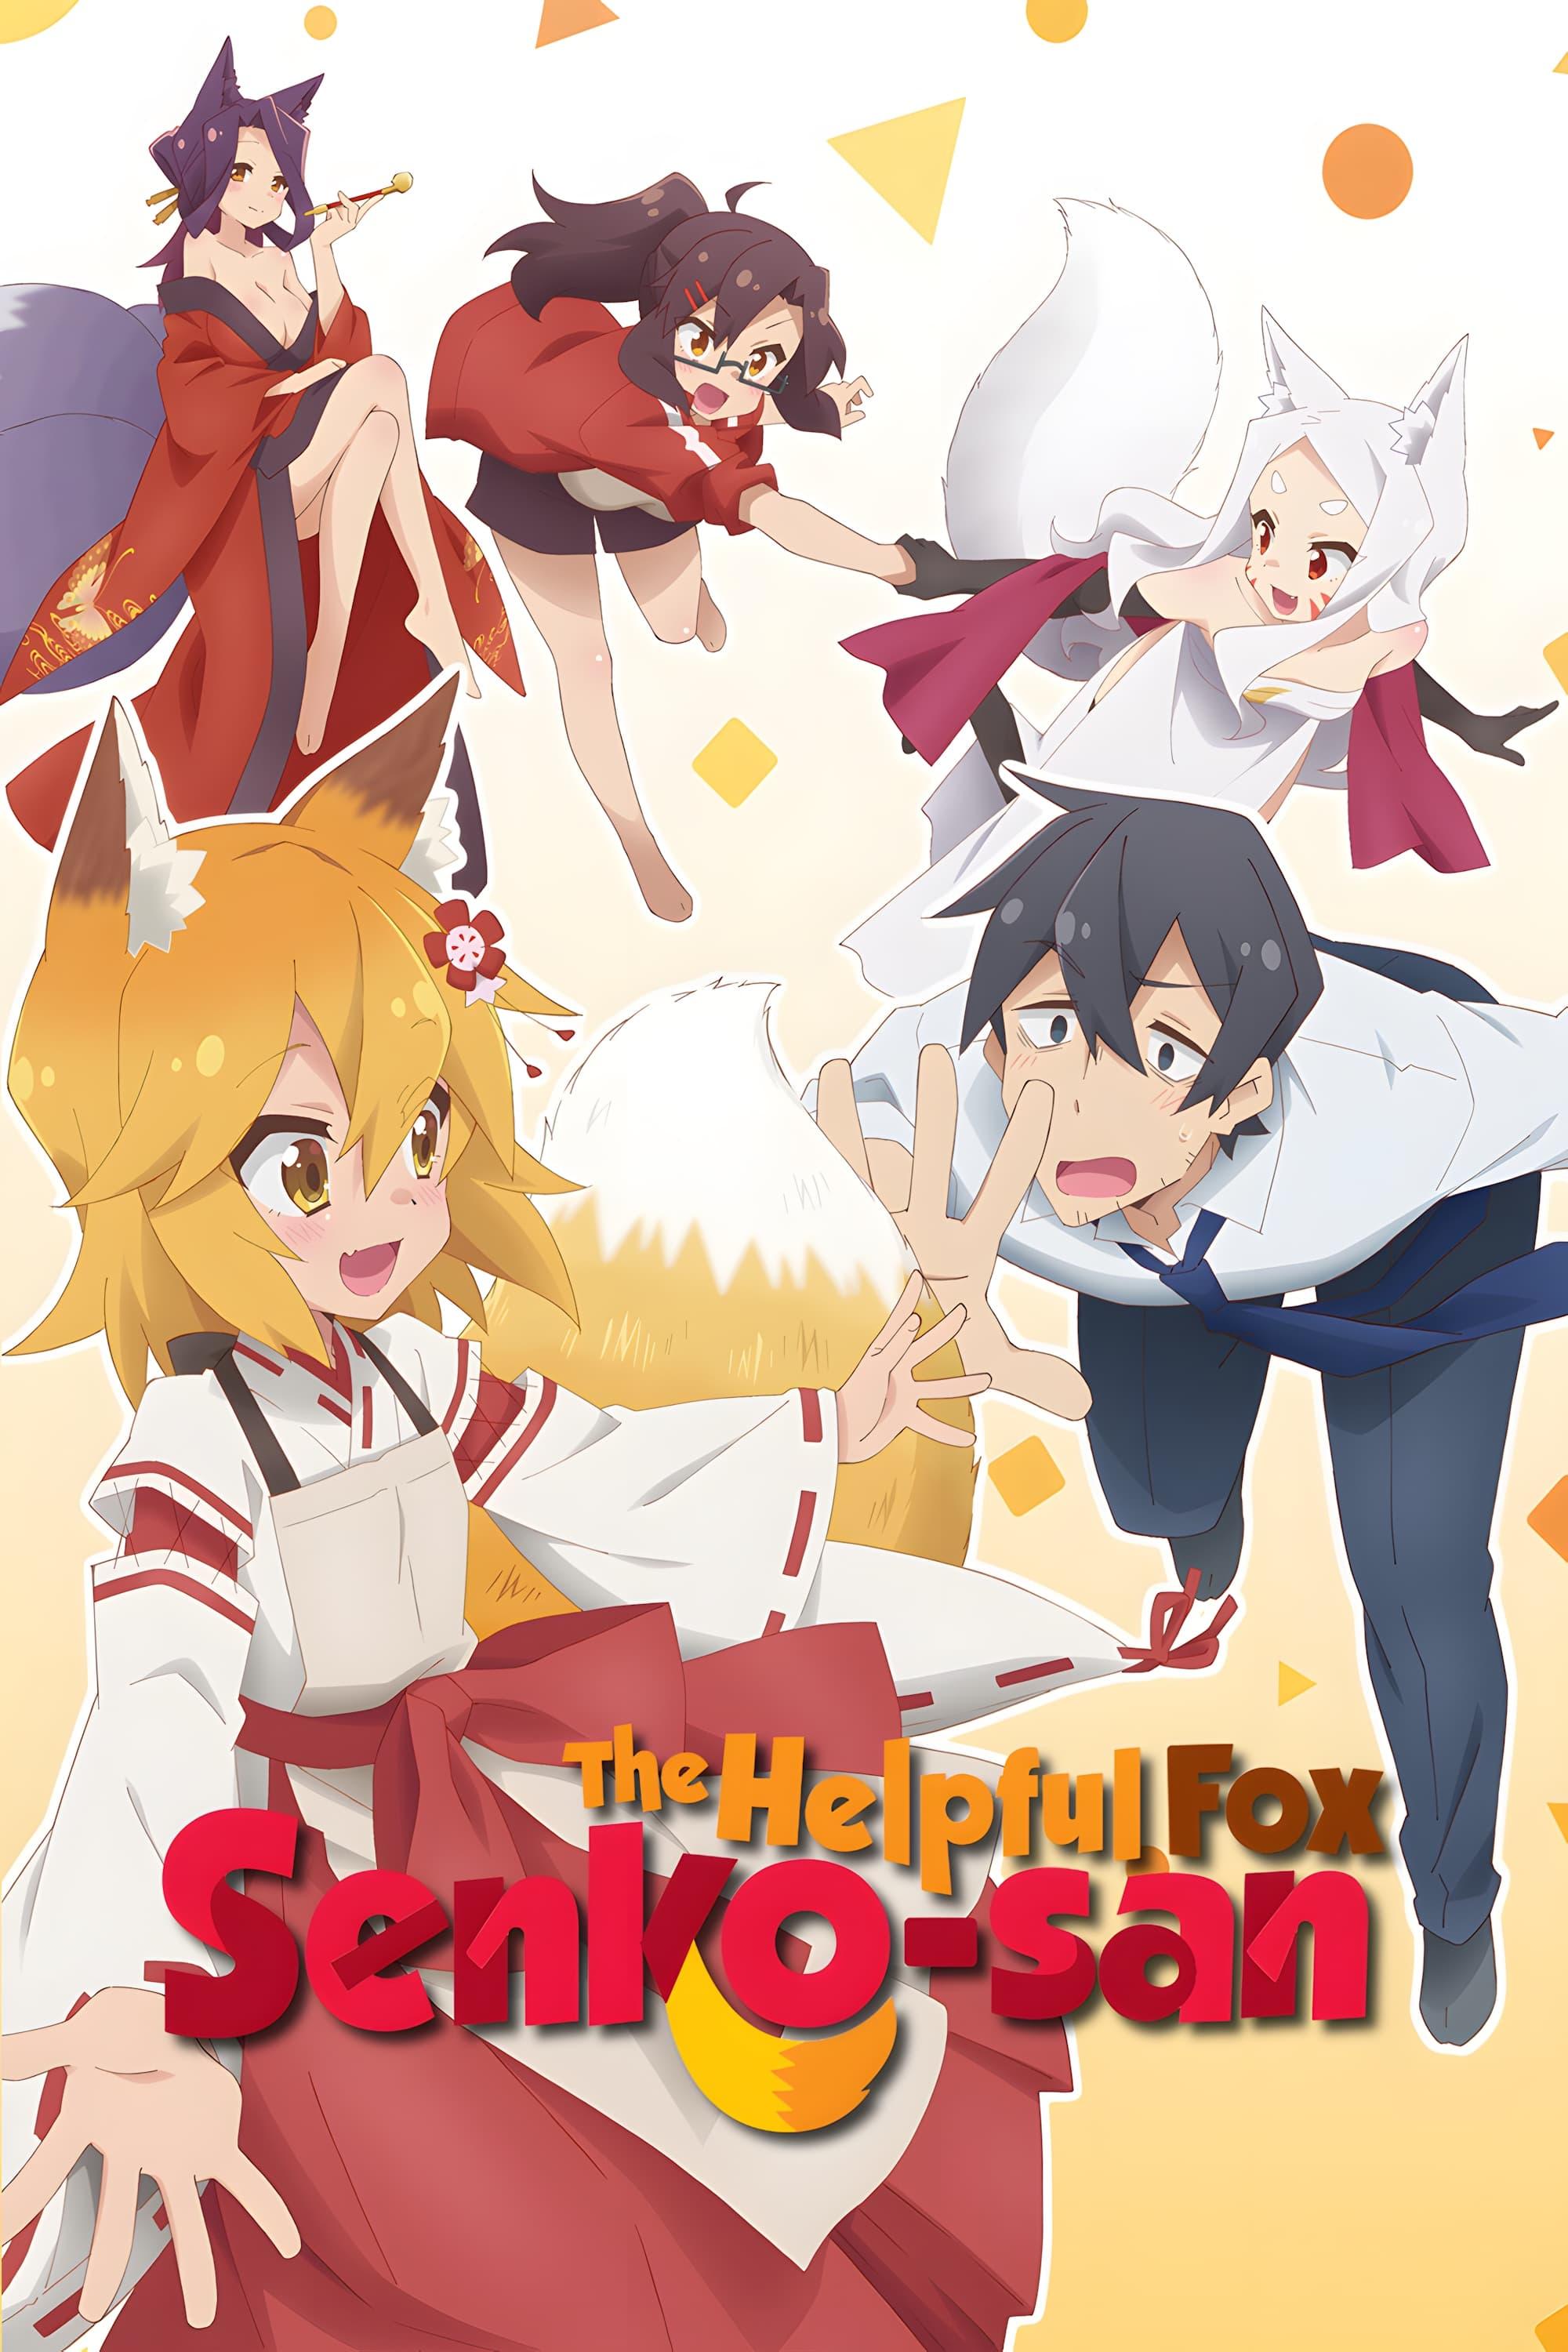 The Helpful Fox Senko-san poster